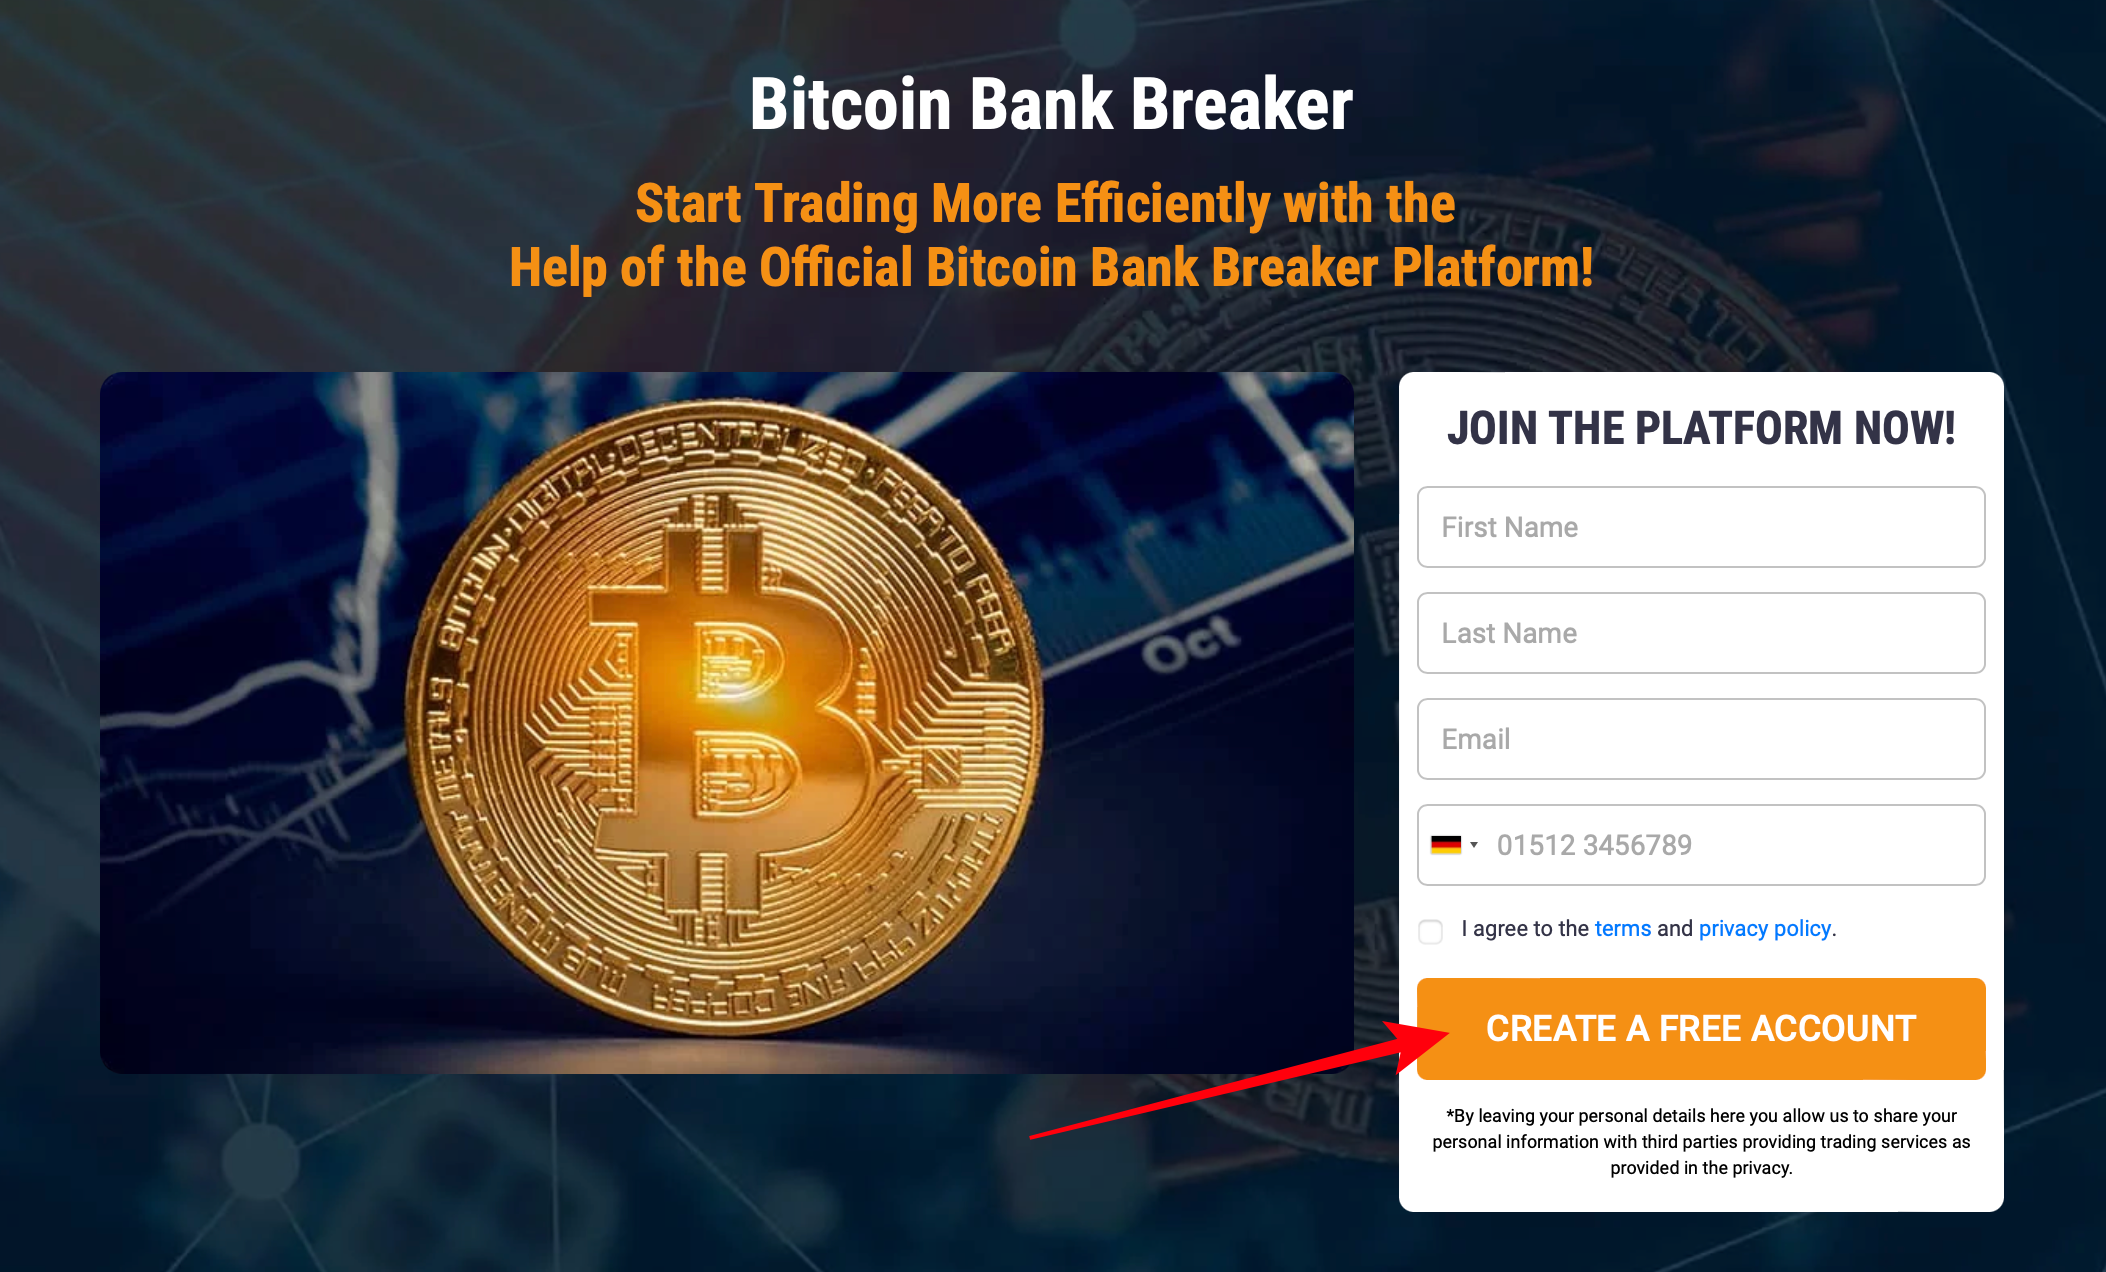 How to open a Bitcoin Bank Breaker Account